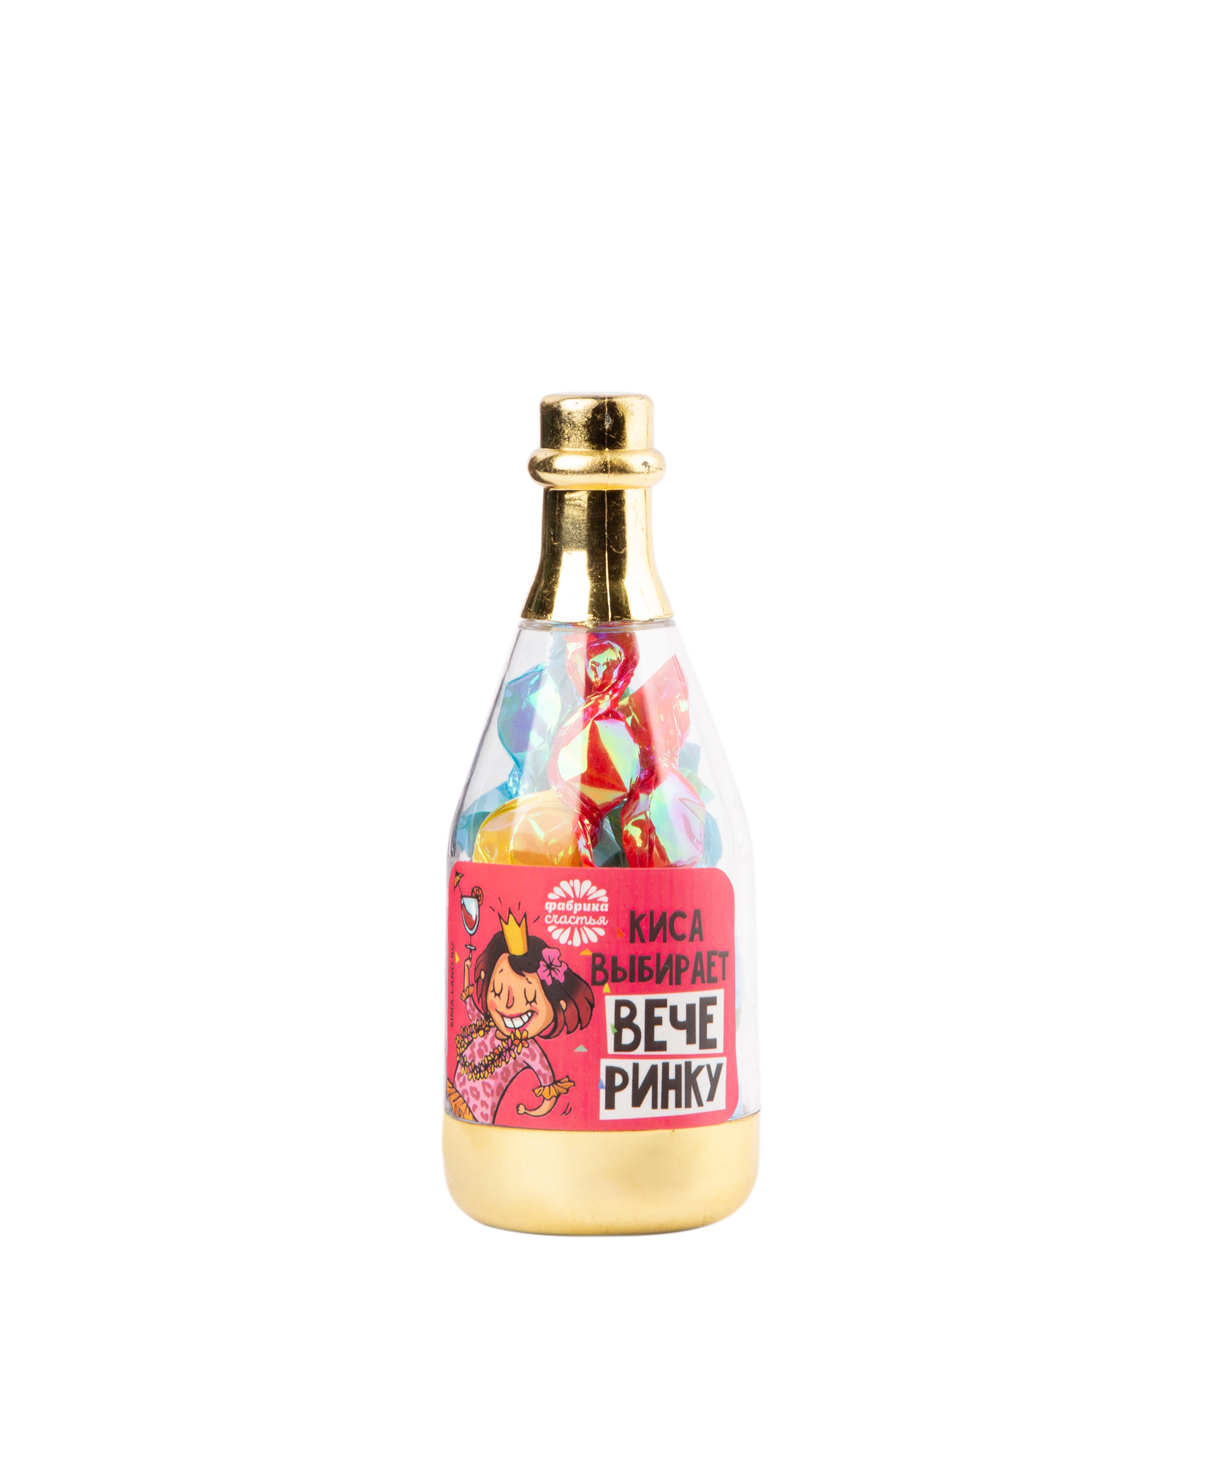 Lollipops `Jpit.am` in a bottle, Киса выбирает вечеринку